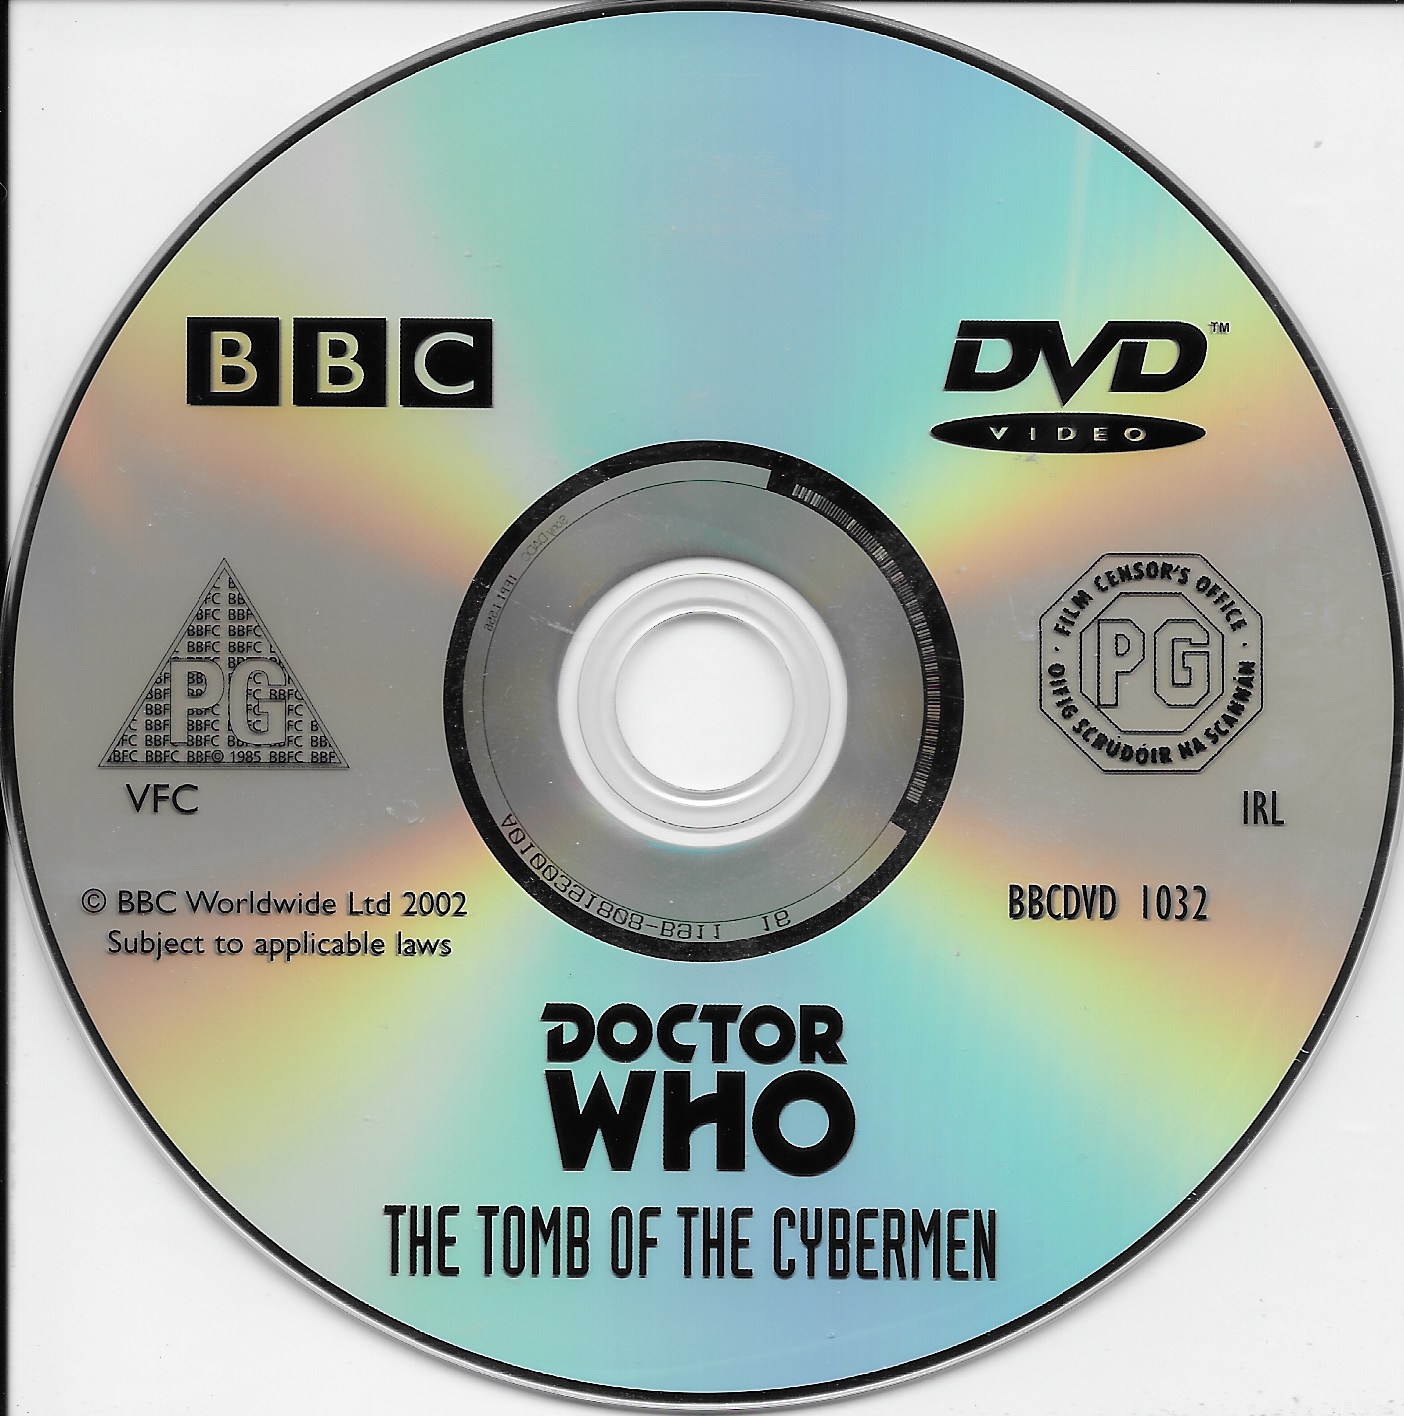 BBC DVD label